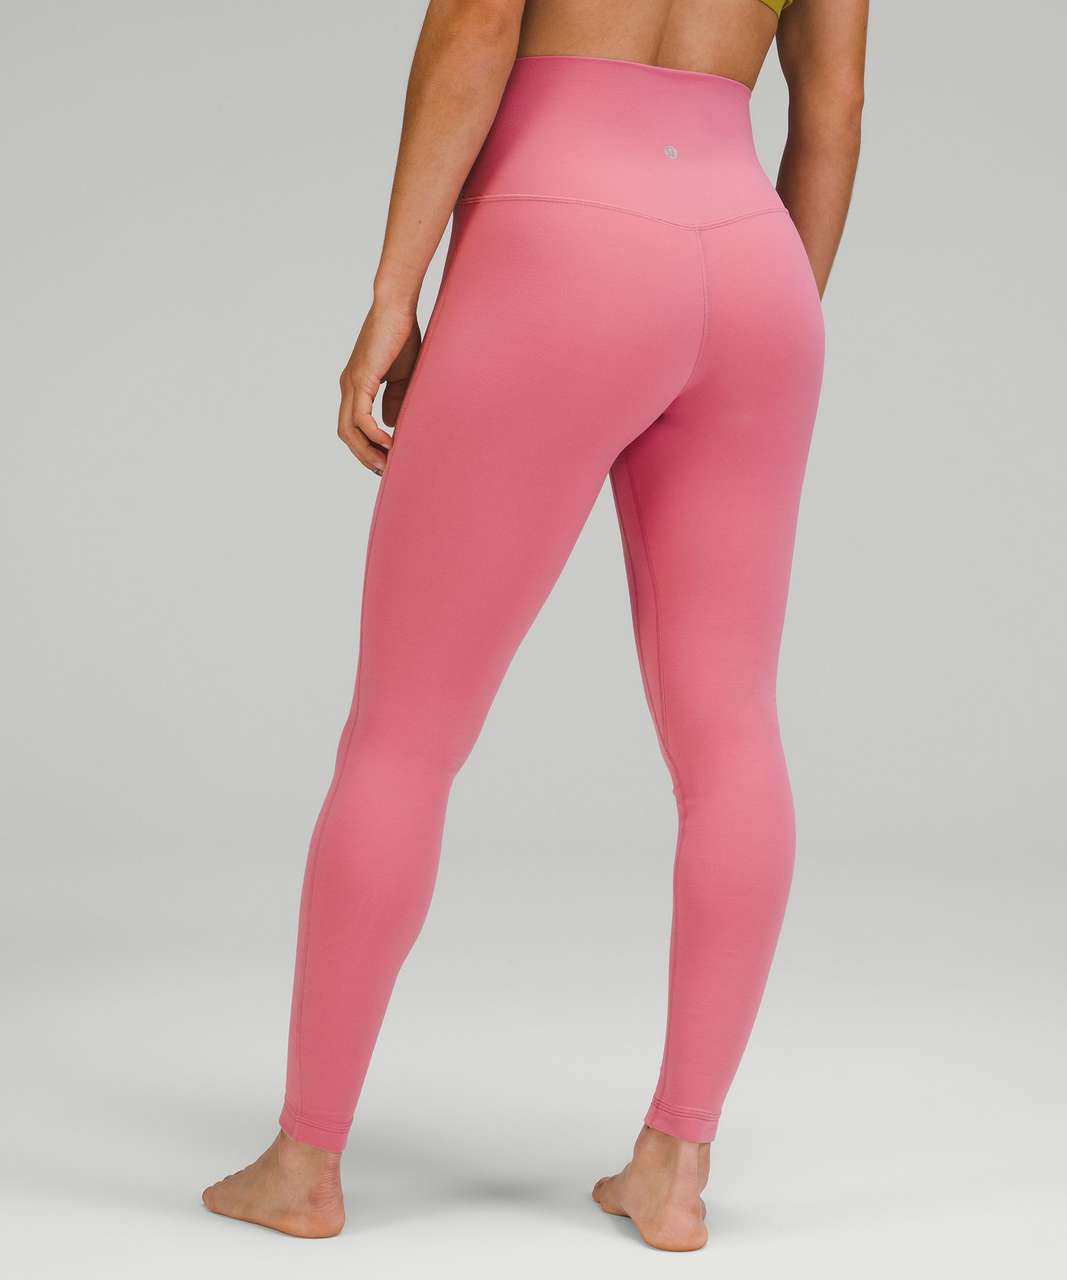 Lululemon Womens Knit Abstract Printed Mid Rise Leggings Pants Pink Bl -  Shop Linda's Stuff